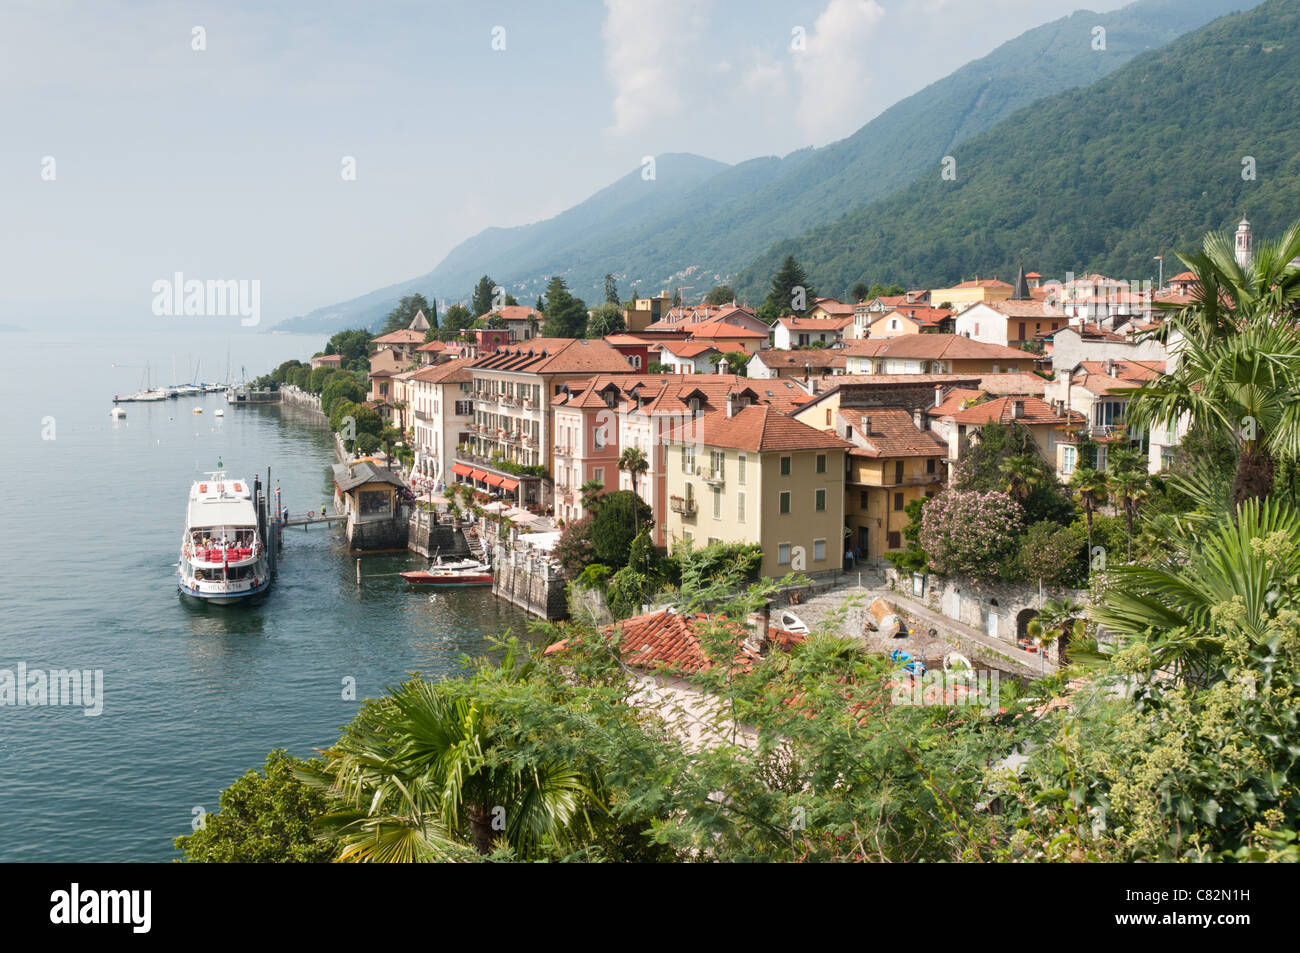 Passenger ferry docked at Cannero Riviera, Lake Maggiore, Italy. Stock Photo